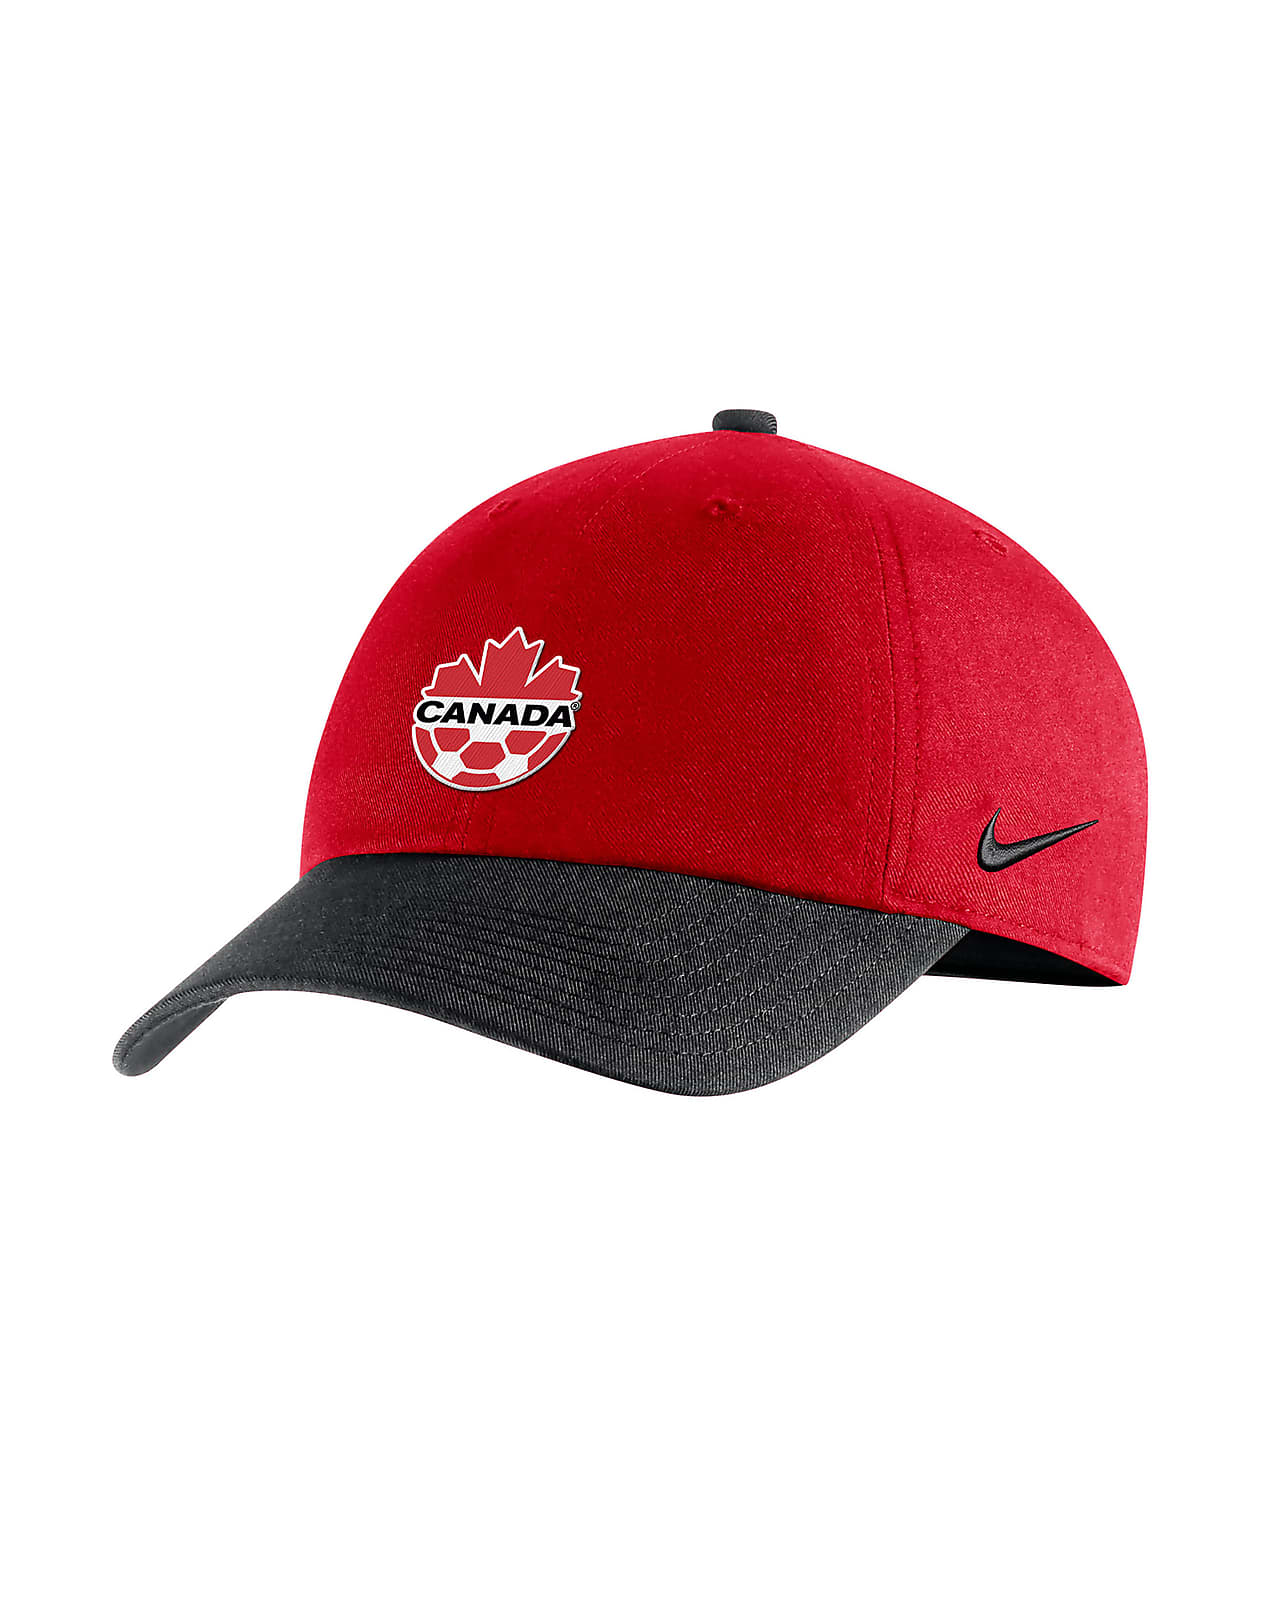 Canada Heritage86 Men's Adjustable Hat